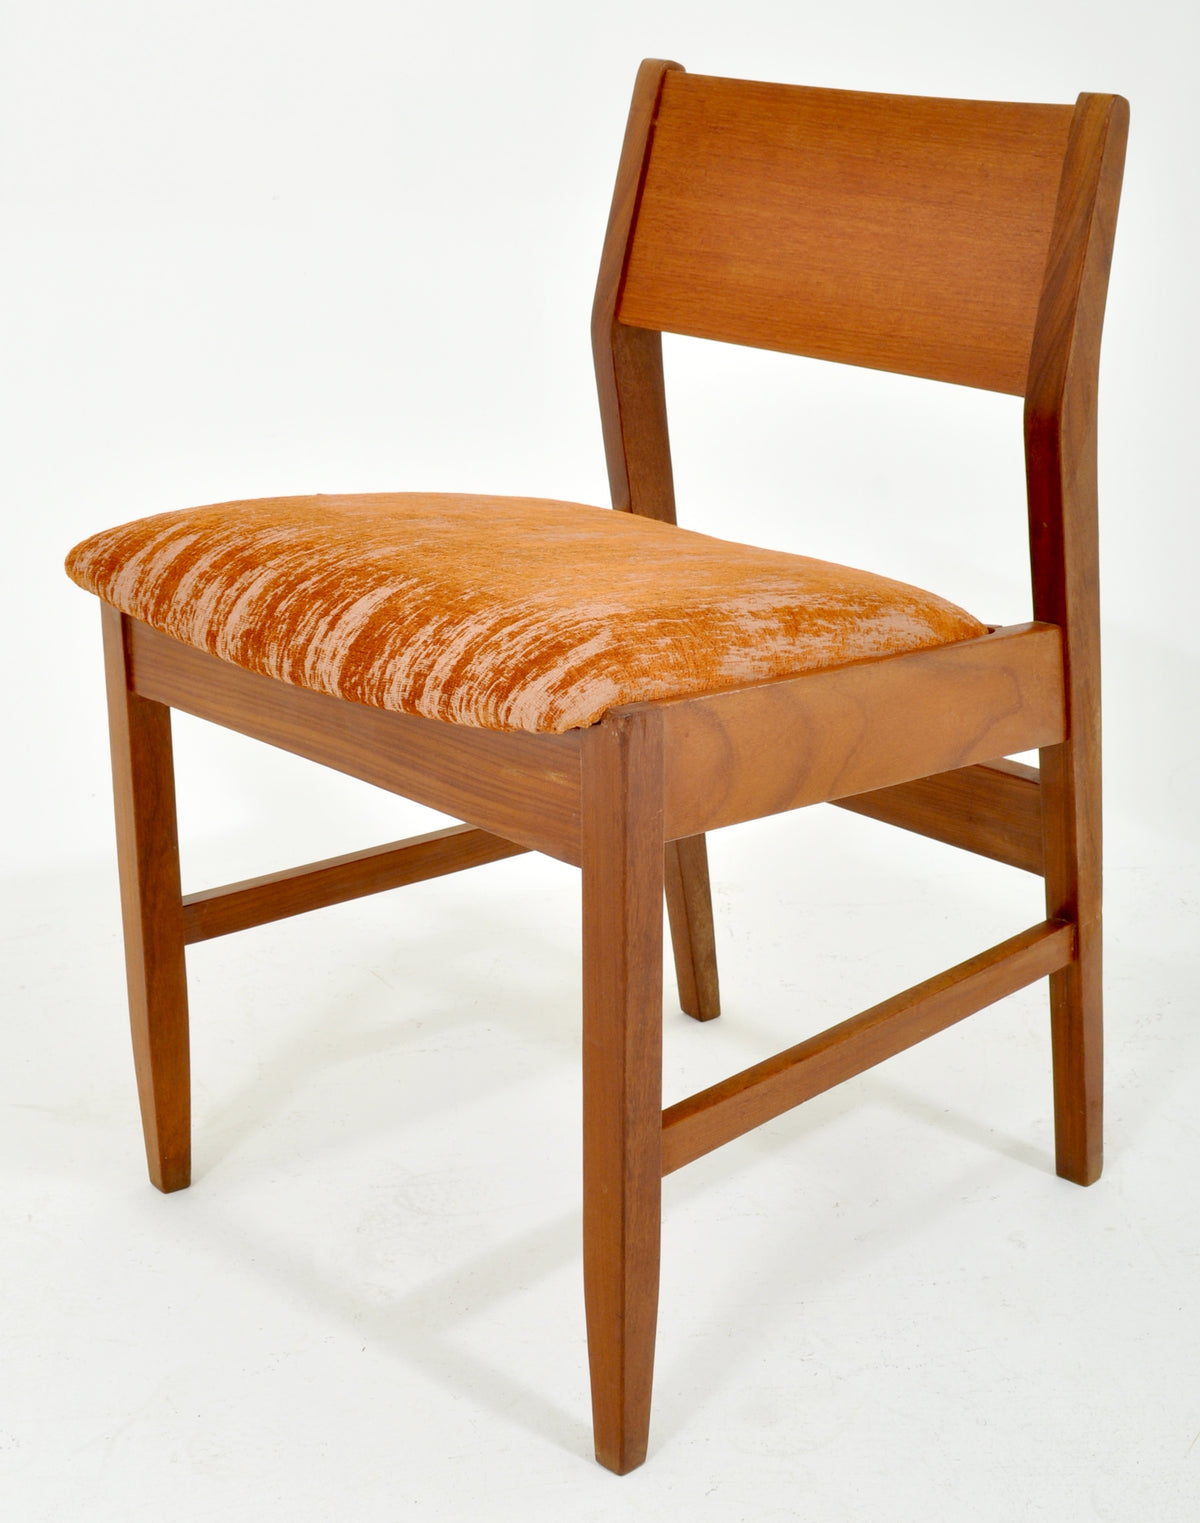 Set of Six Mid-Century Modern Danish Style Teak Dining Chairs, 1960s